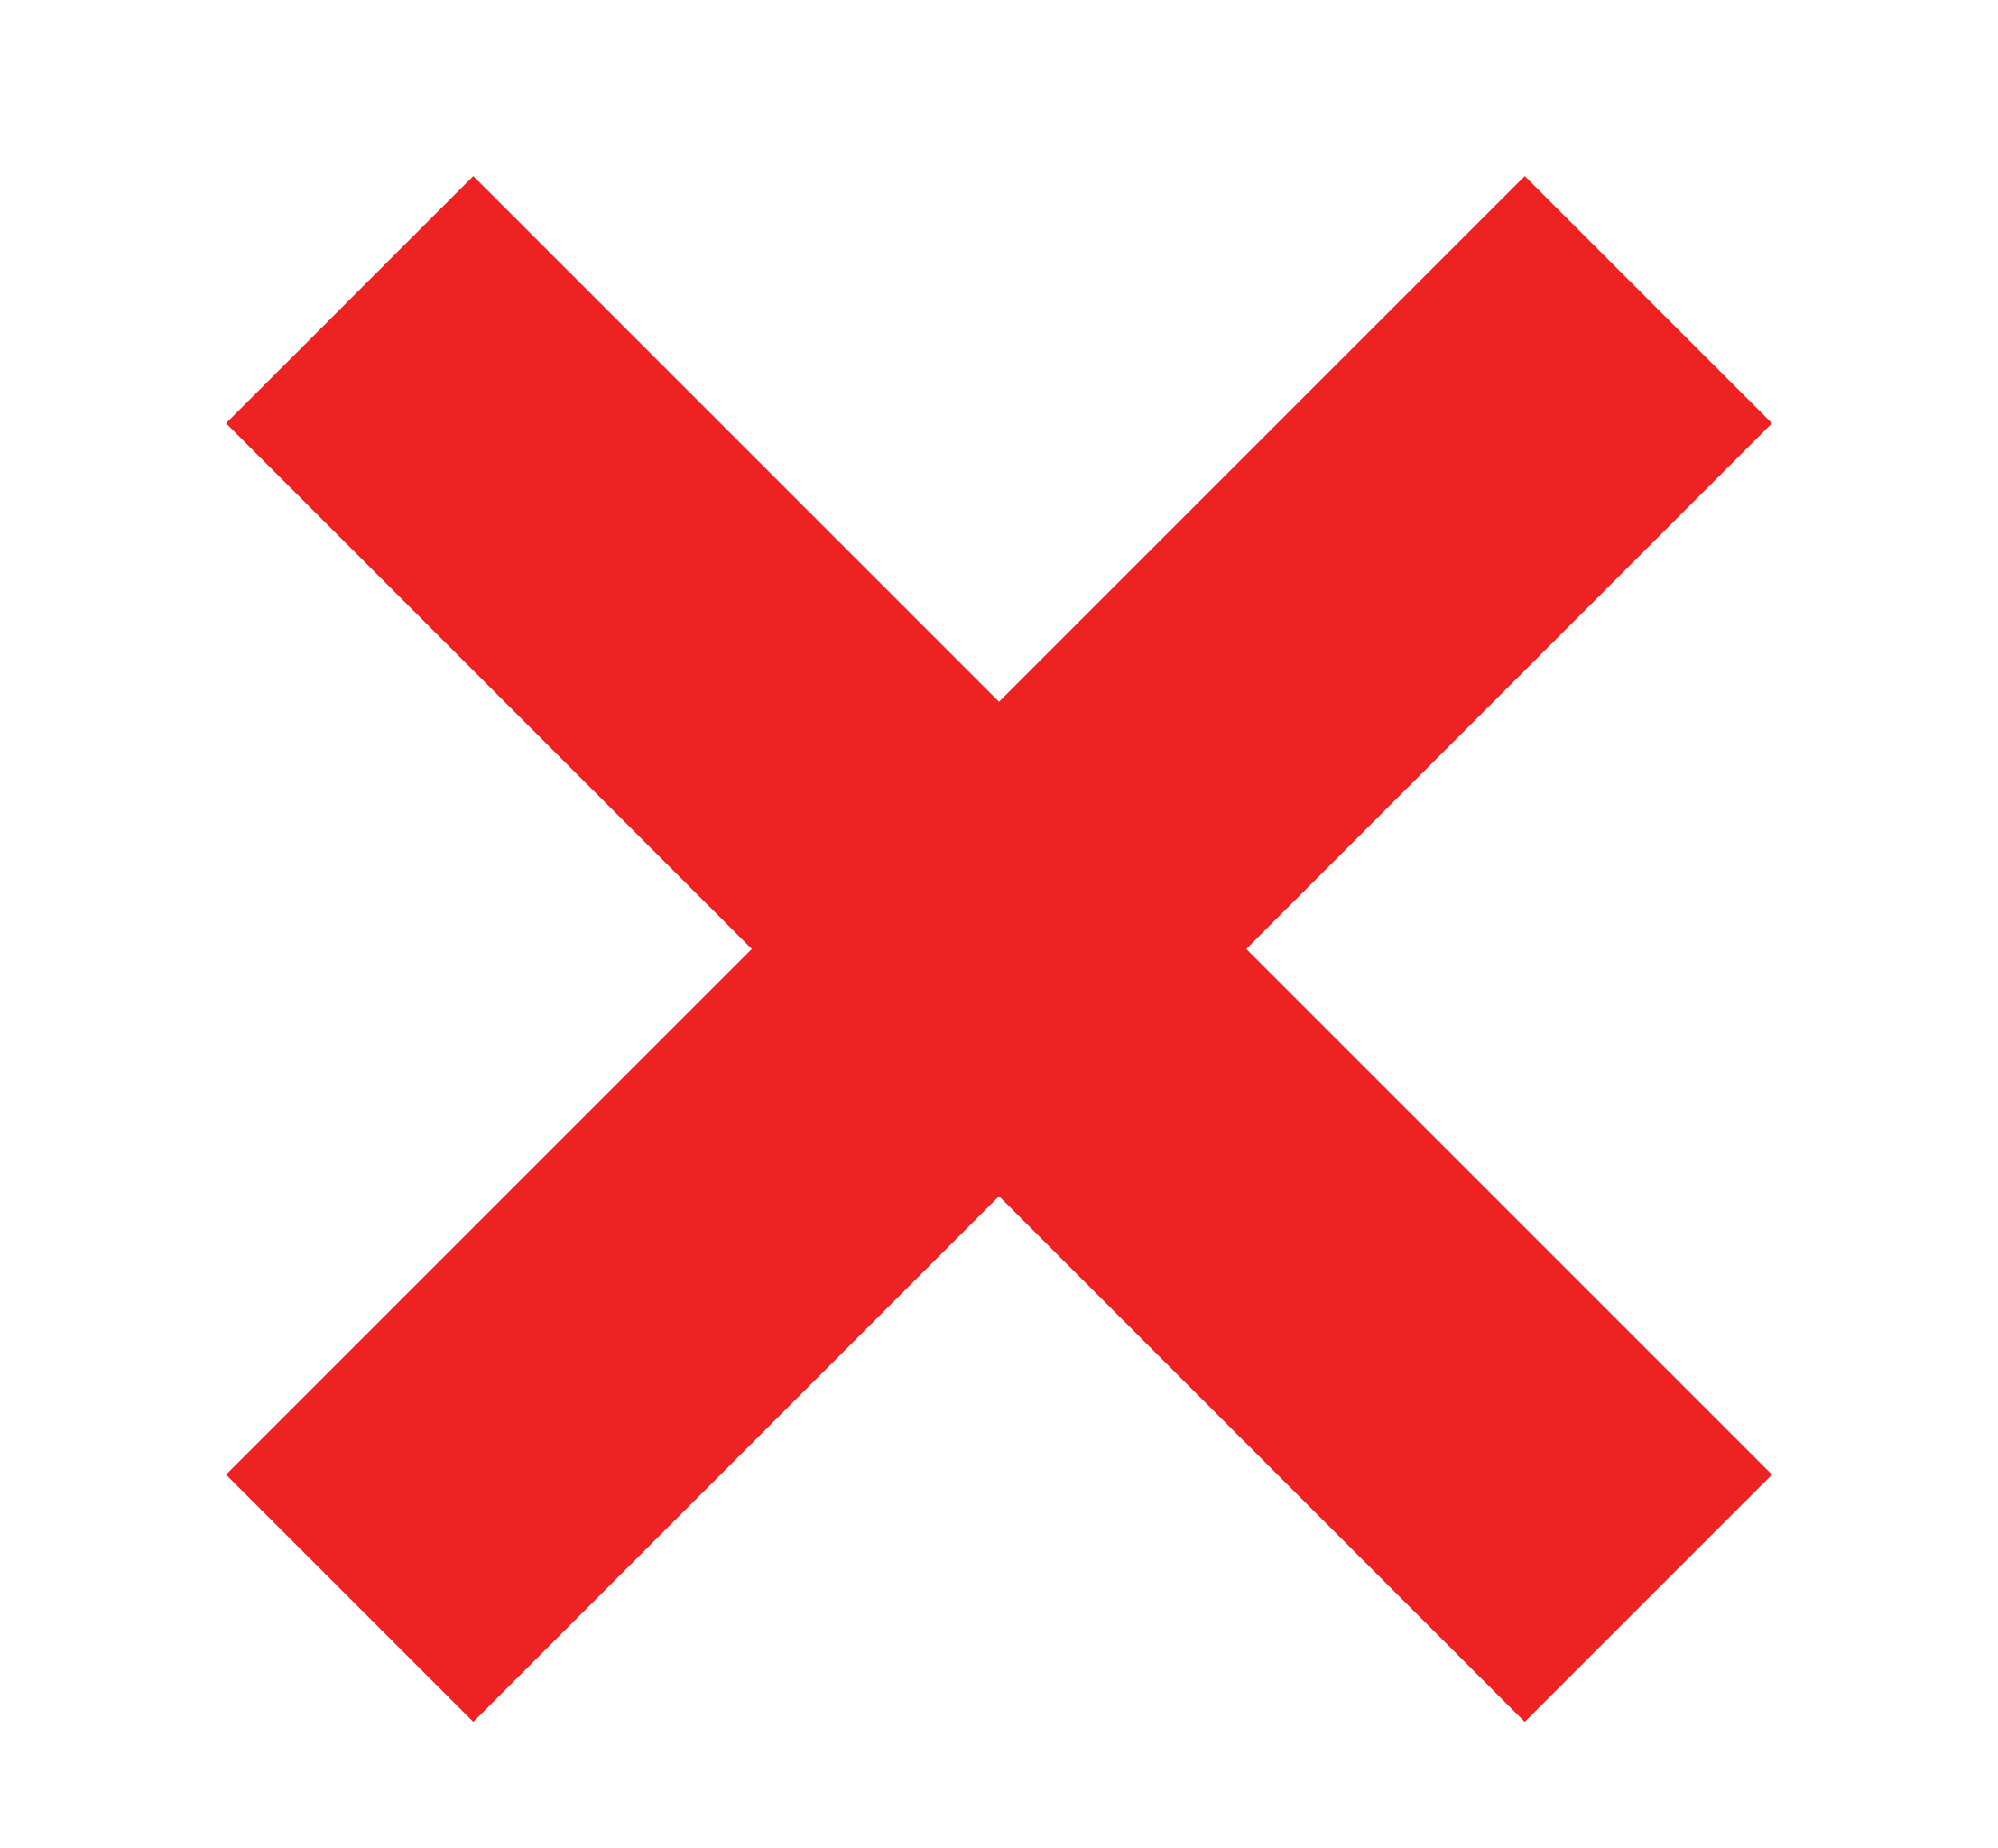 Image x icon. Красный крестик. Перечеркнутый крест. Крестик значок. Крестик на белом фоне.